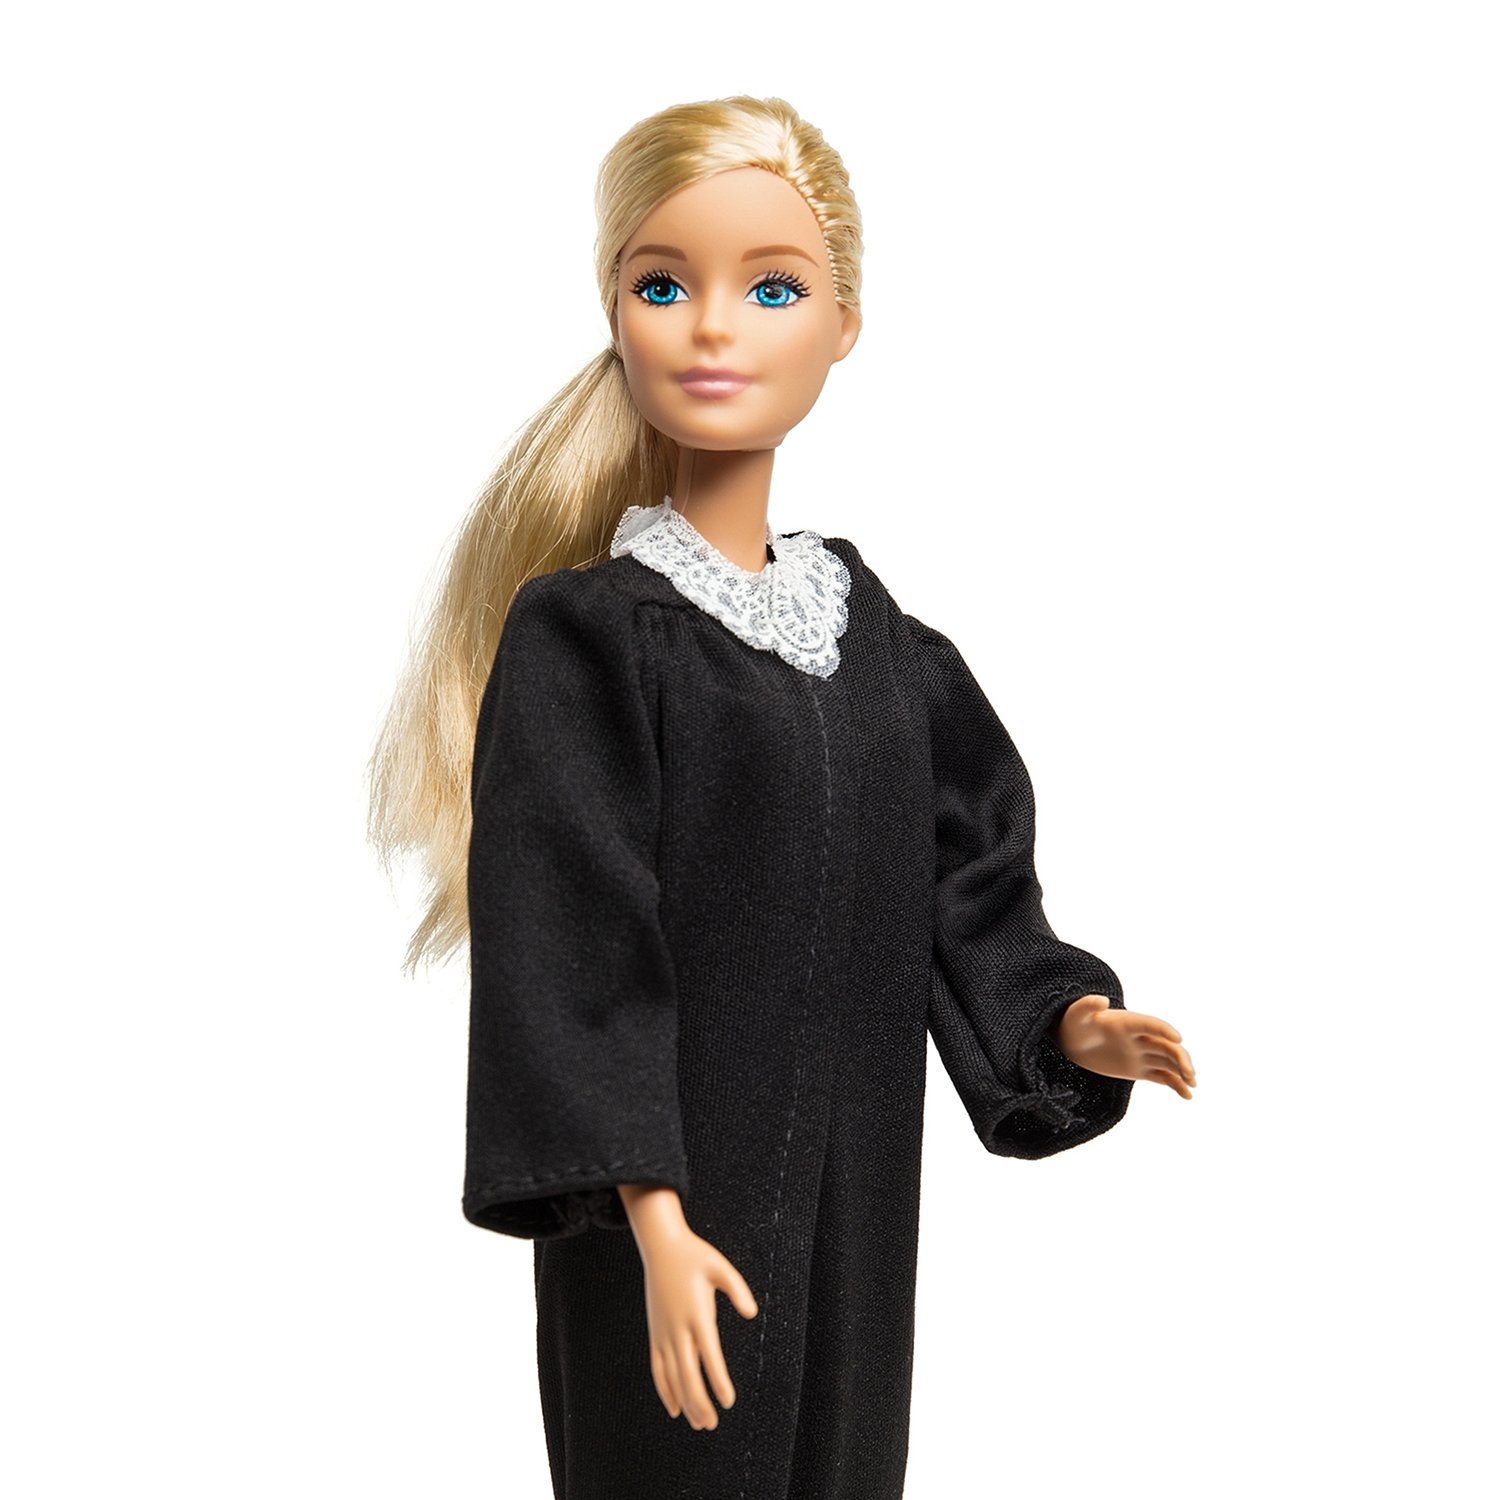 Кукла Barbie Судья блондинка, FXP42